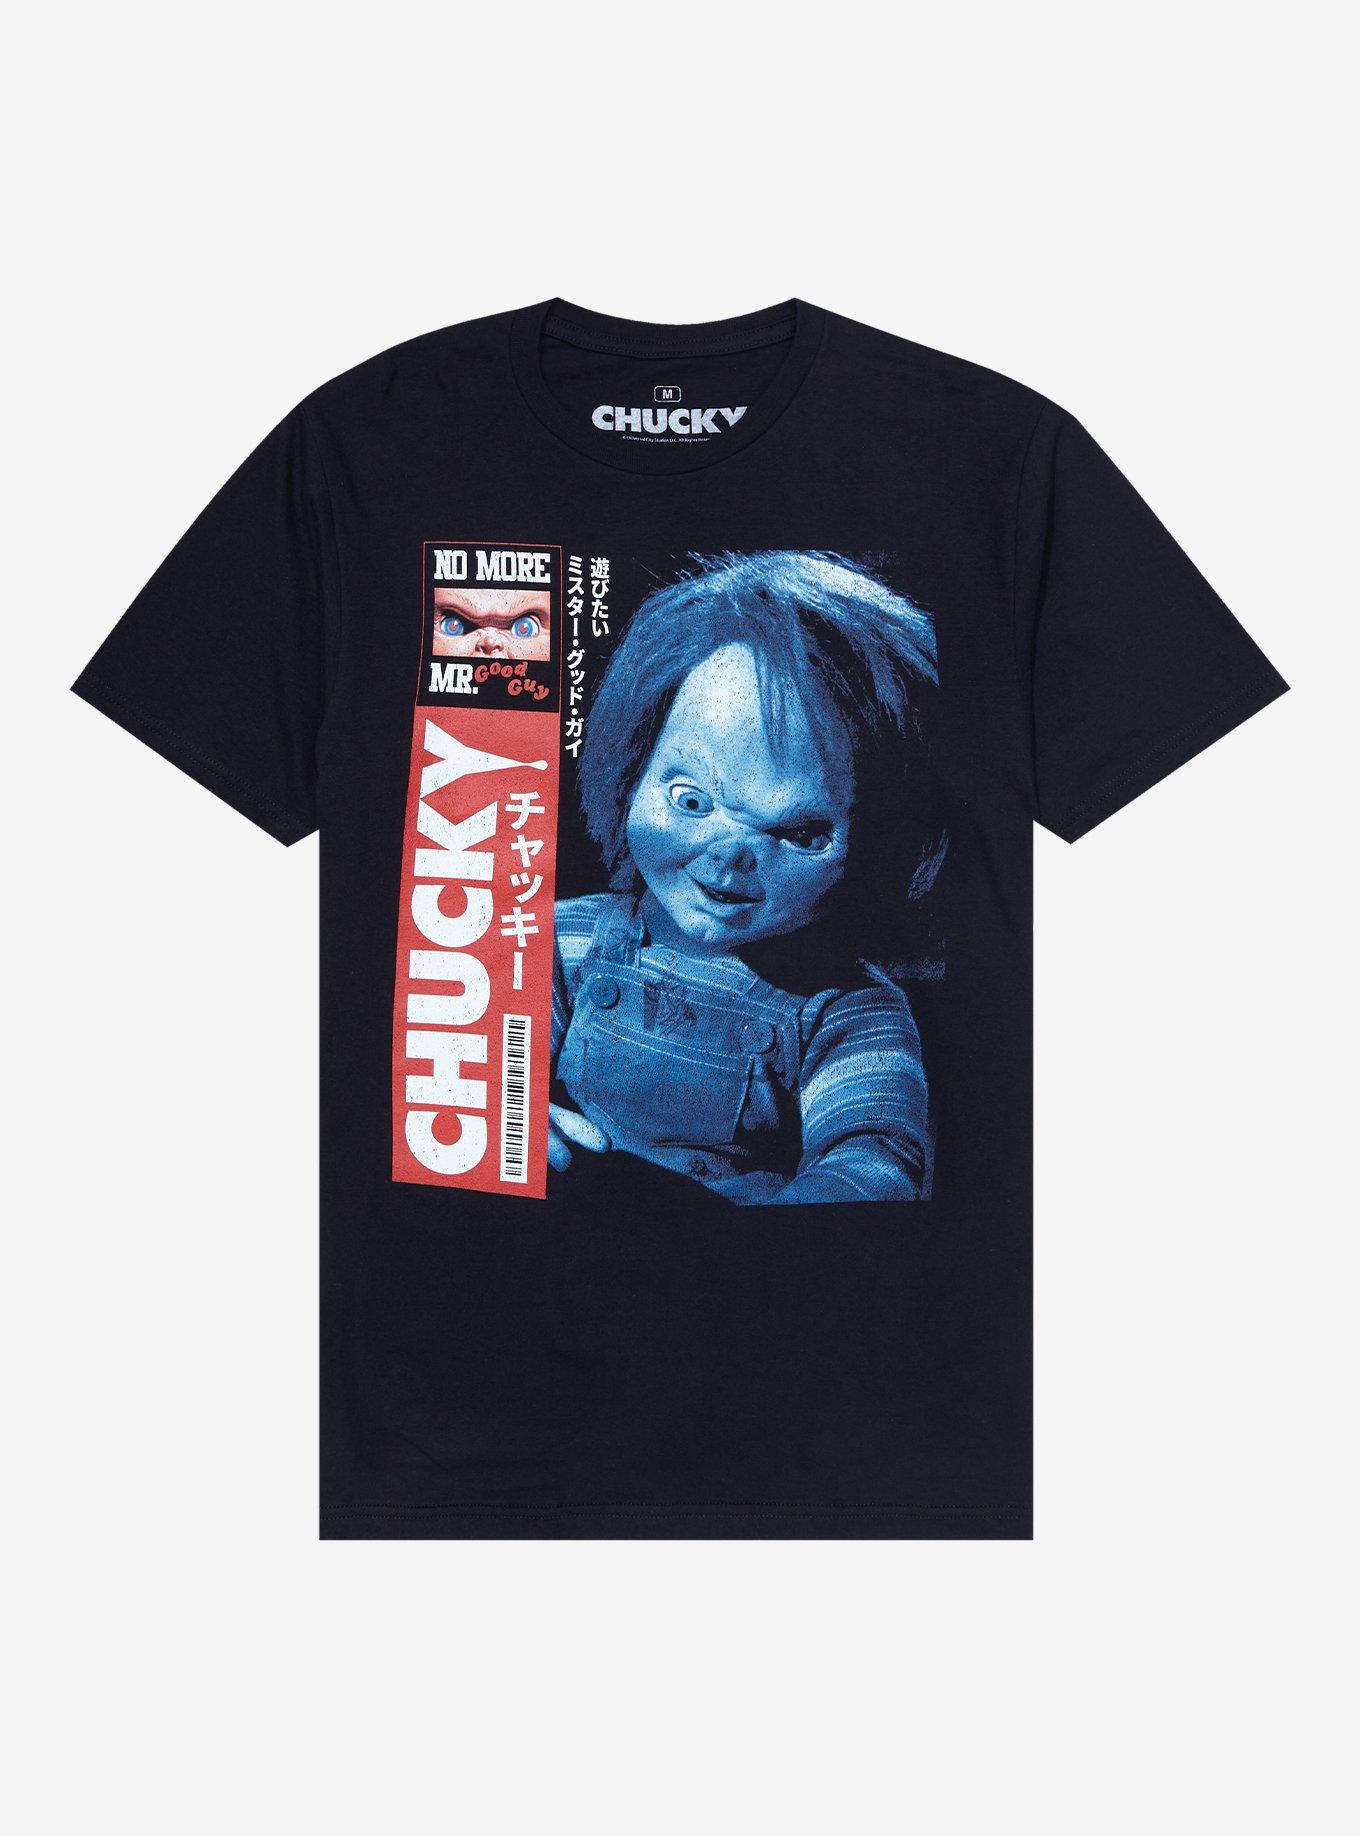 Chucky Album Cover T-Shirt | Hot Topic